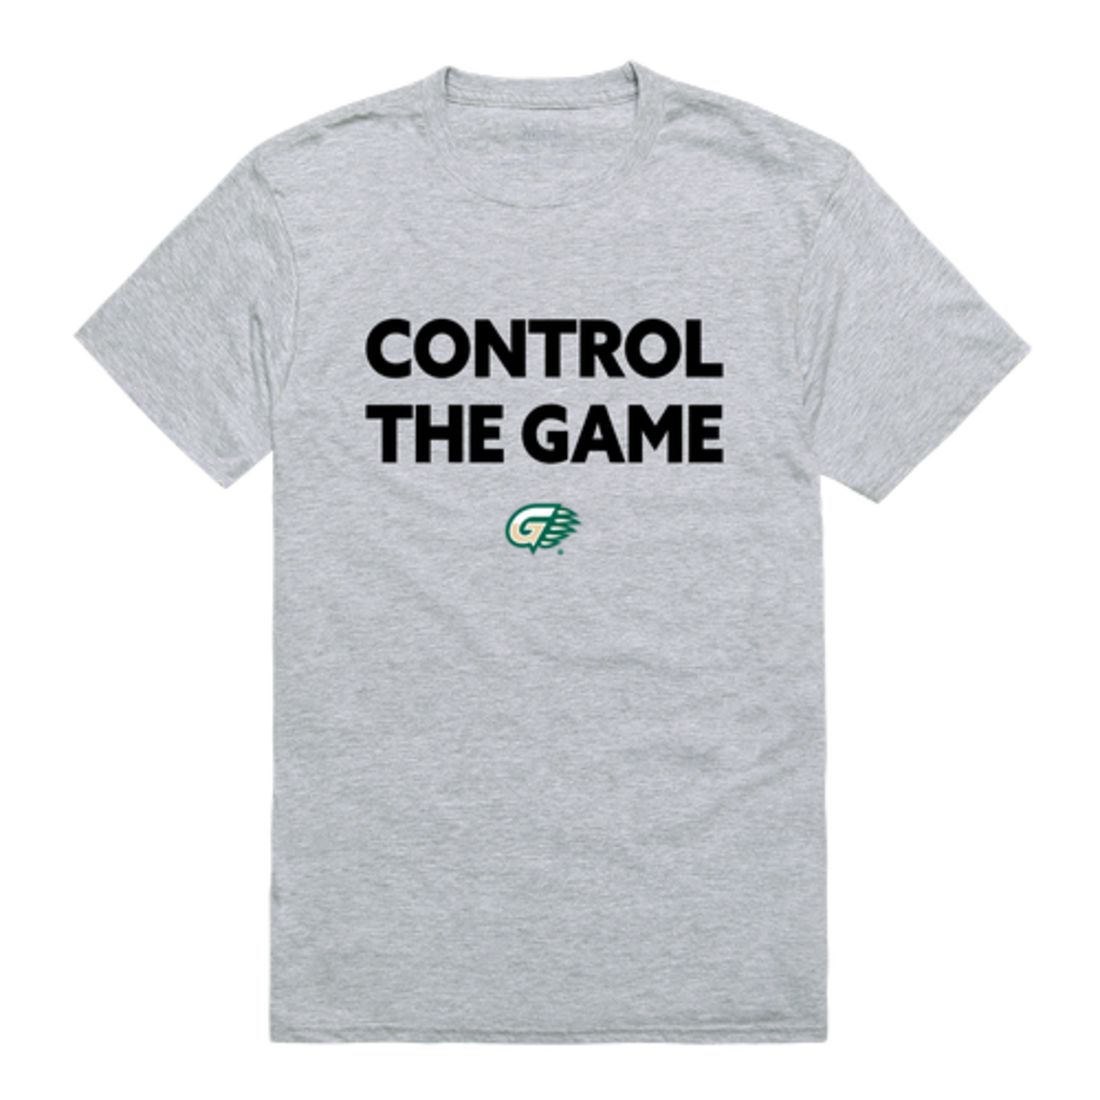 Georgia Gwinnett College Grizzlies Control The Game T-Shirt Tee